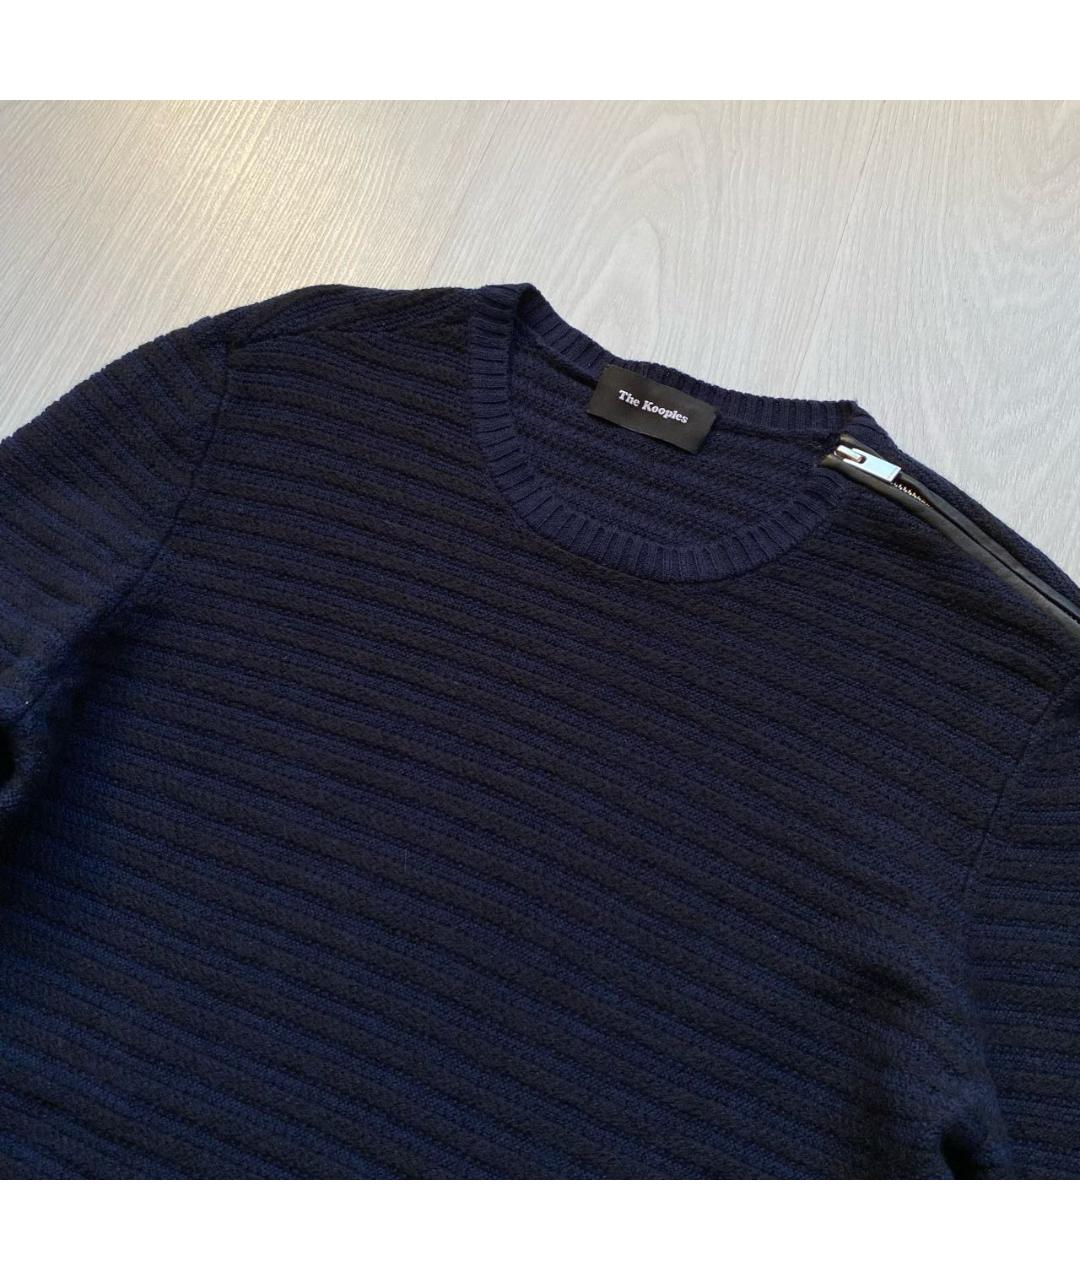 THE KOOPLES Темно-синий шерстяной джемпер / свитер, фото 2